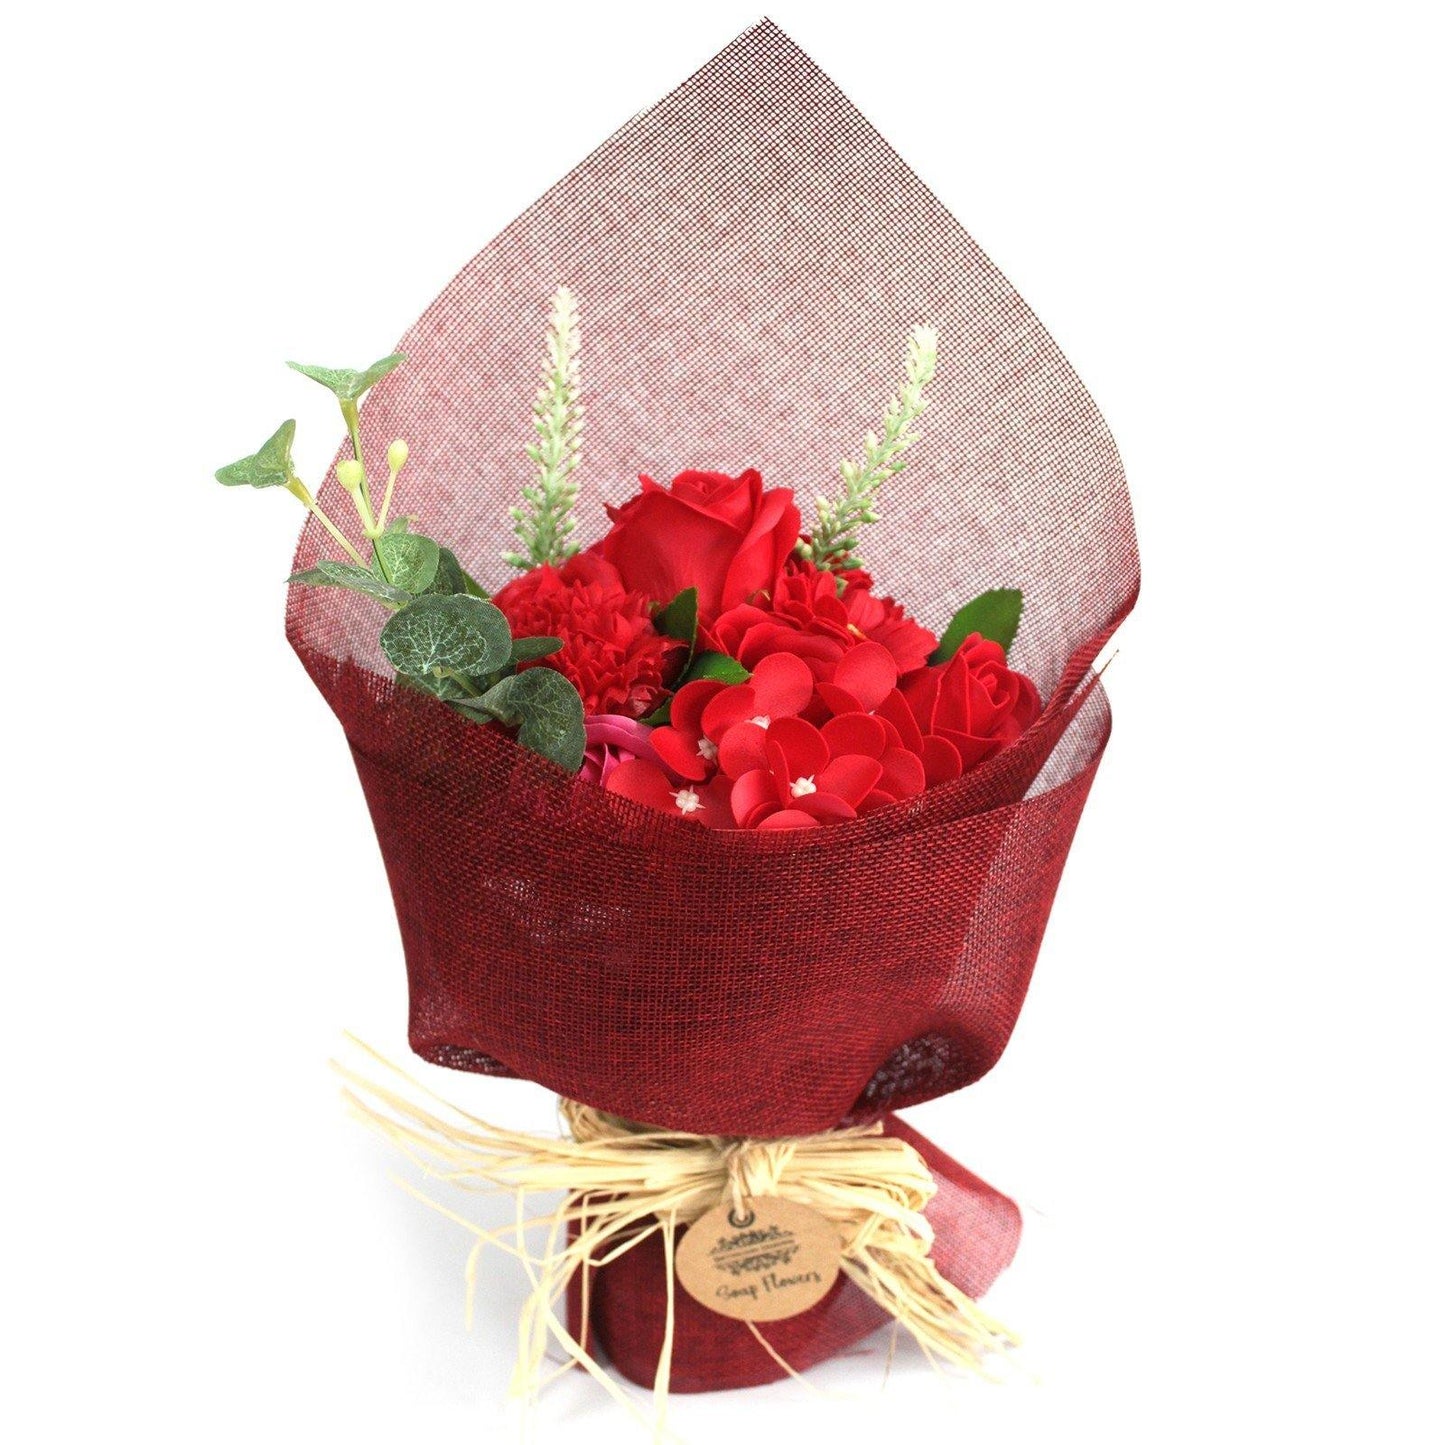 Scented Standing Soap Red Flower Bouquet - Bath Spa Gift - Kporium Home & Garden